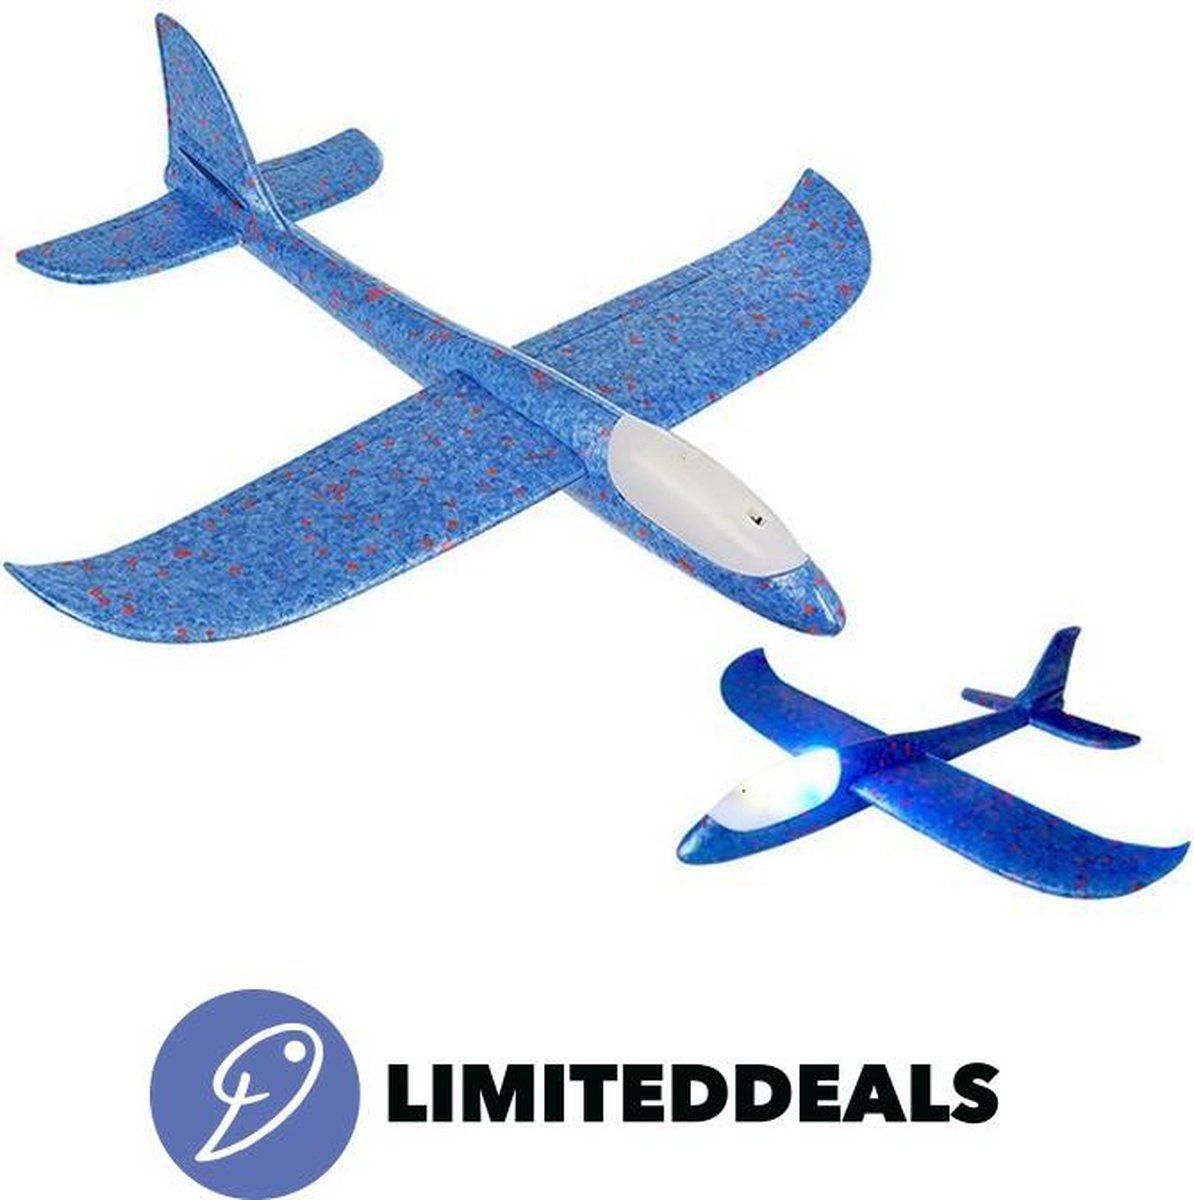 Afbeelding van product LED Zweefvliegtuig BLAUW XL - Werpvliegtuig - Speelgoed vliegtuig - Foam vliegtuig - LimitedDeals